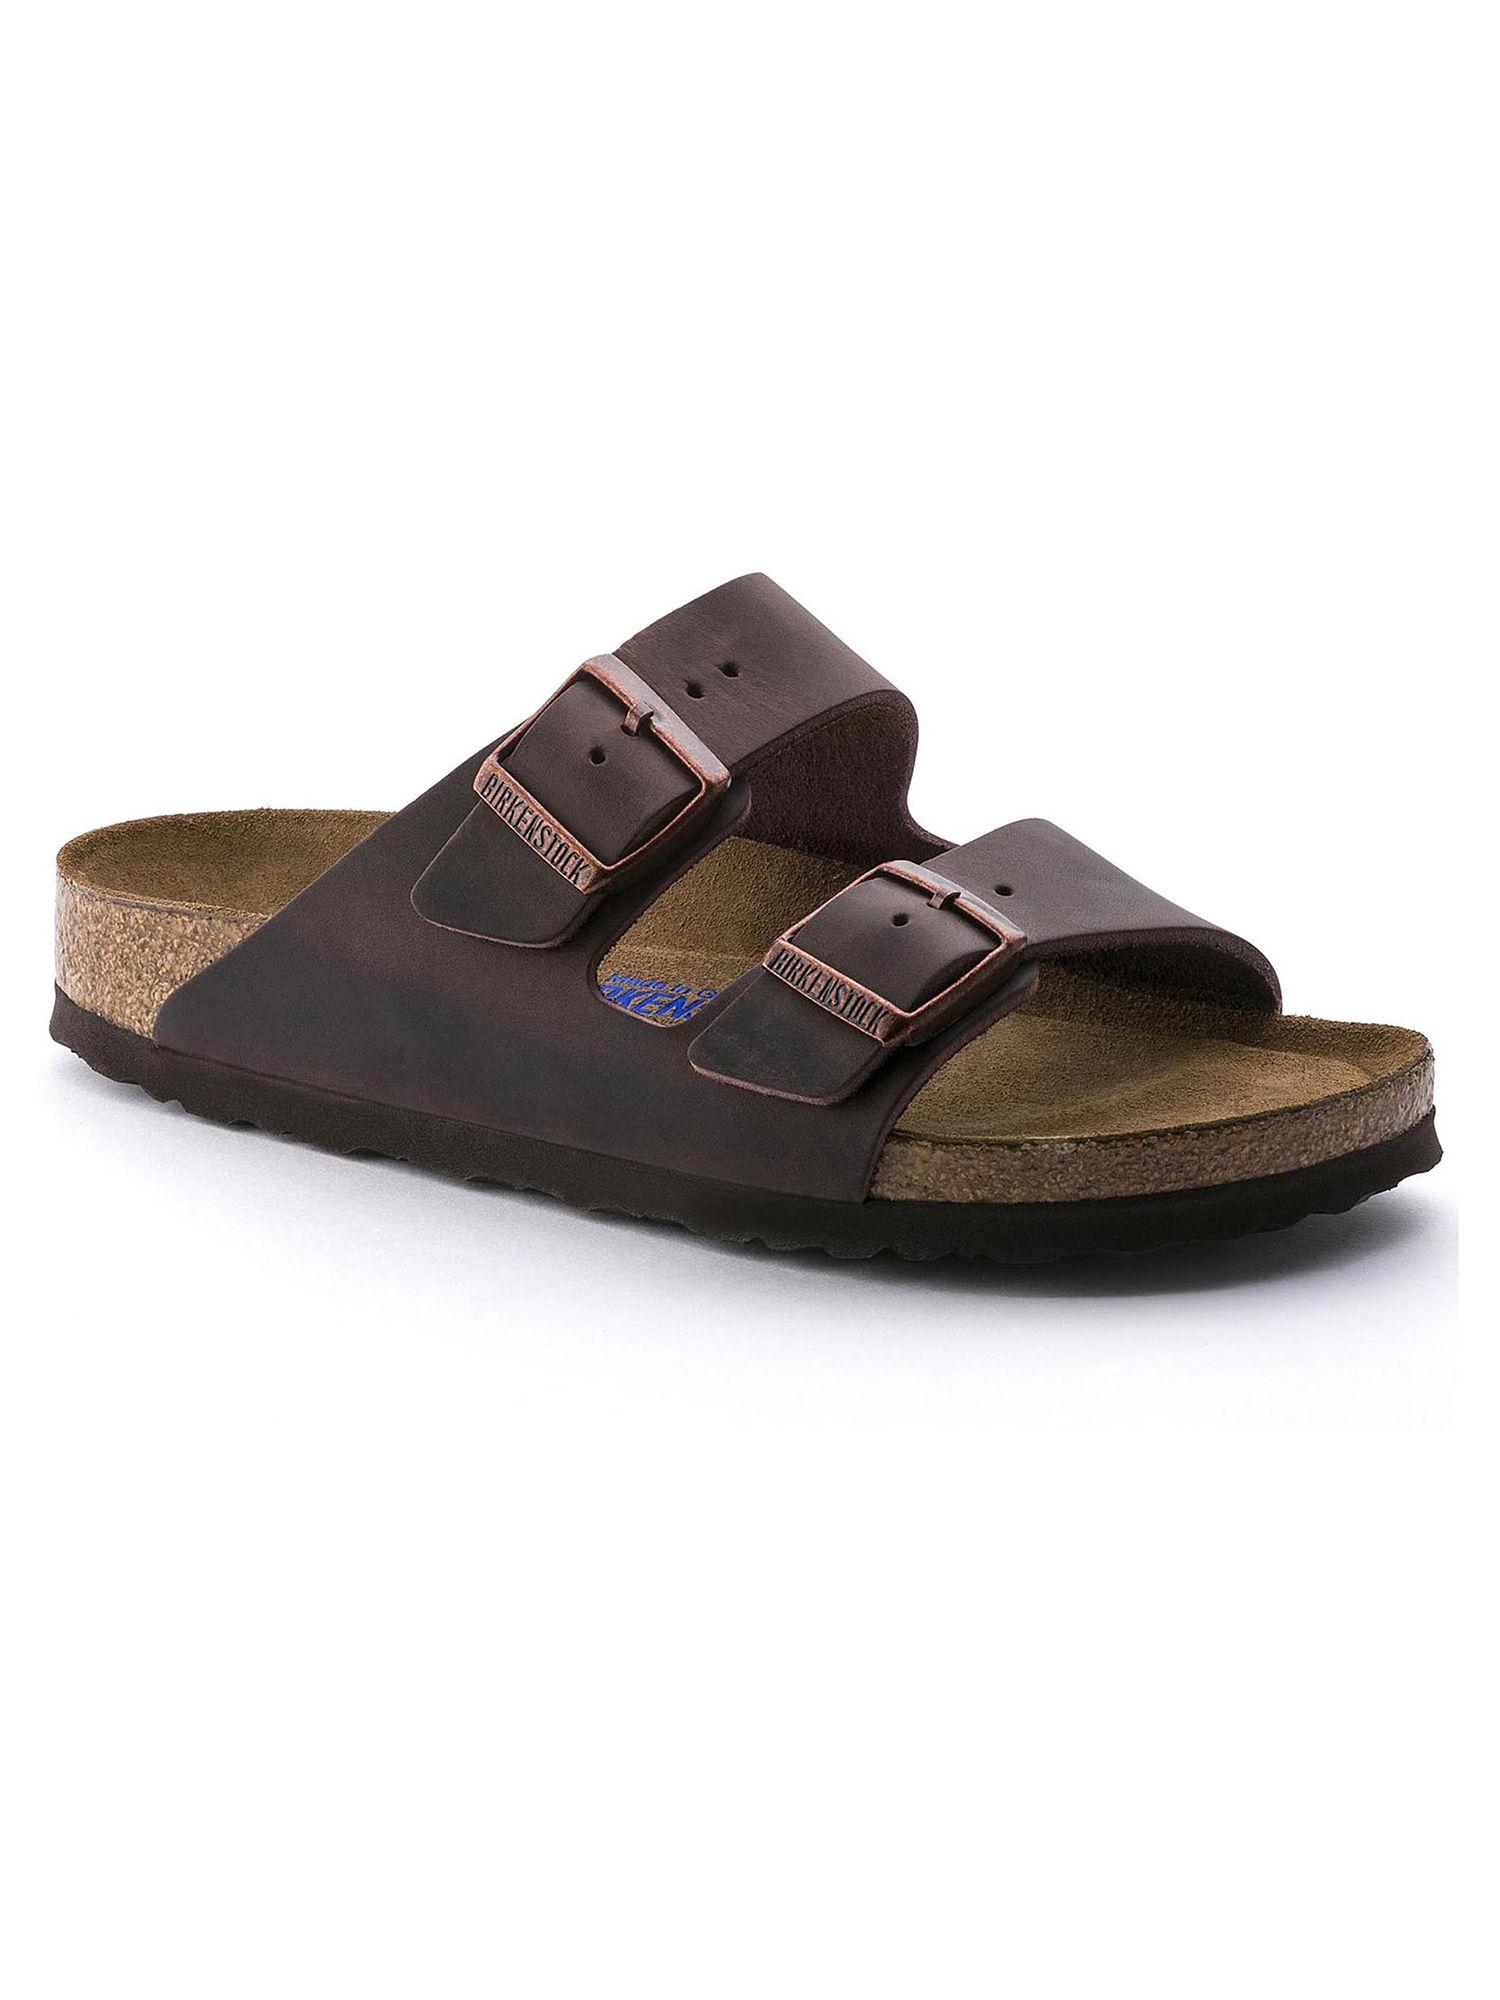 Arizona Soft Footbed Oiled Nubuck Leather Brown Narrow Unisex Sandal